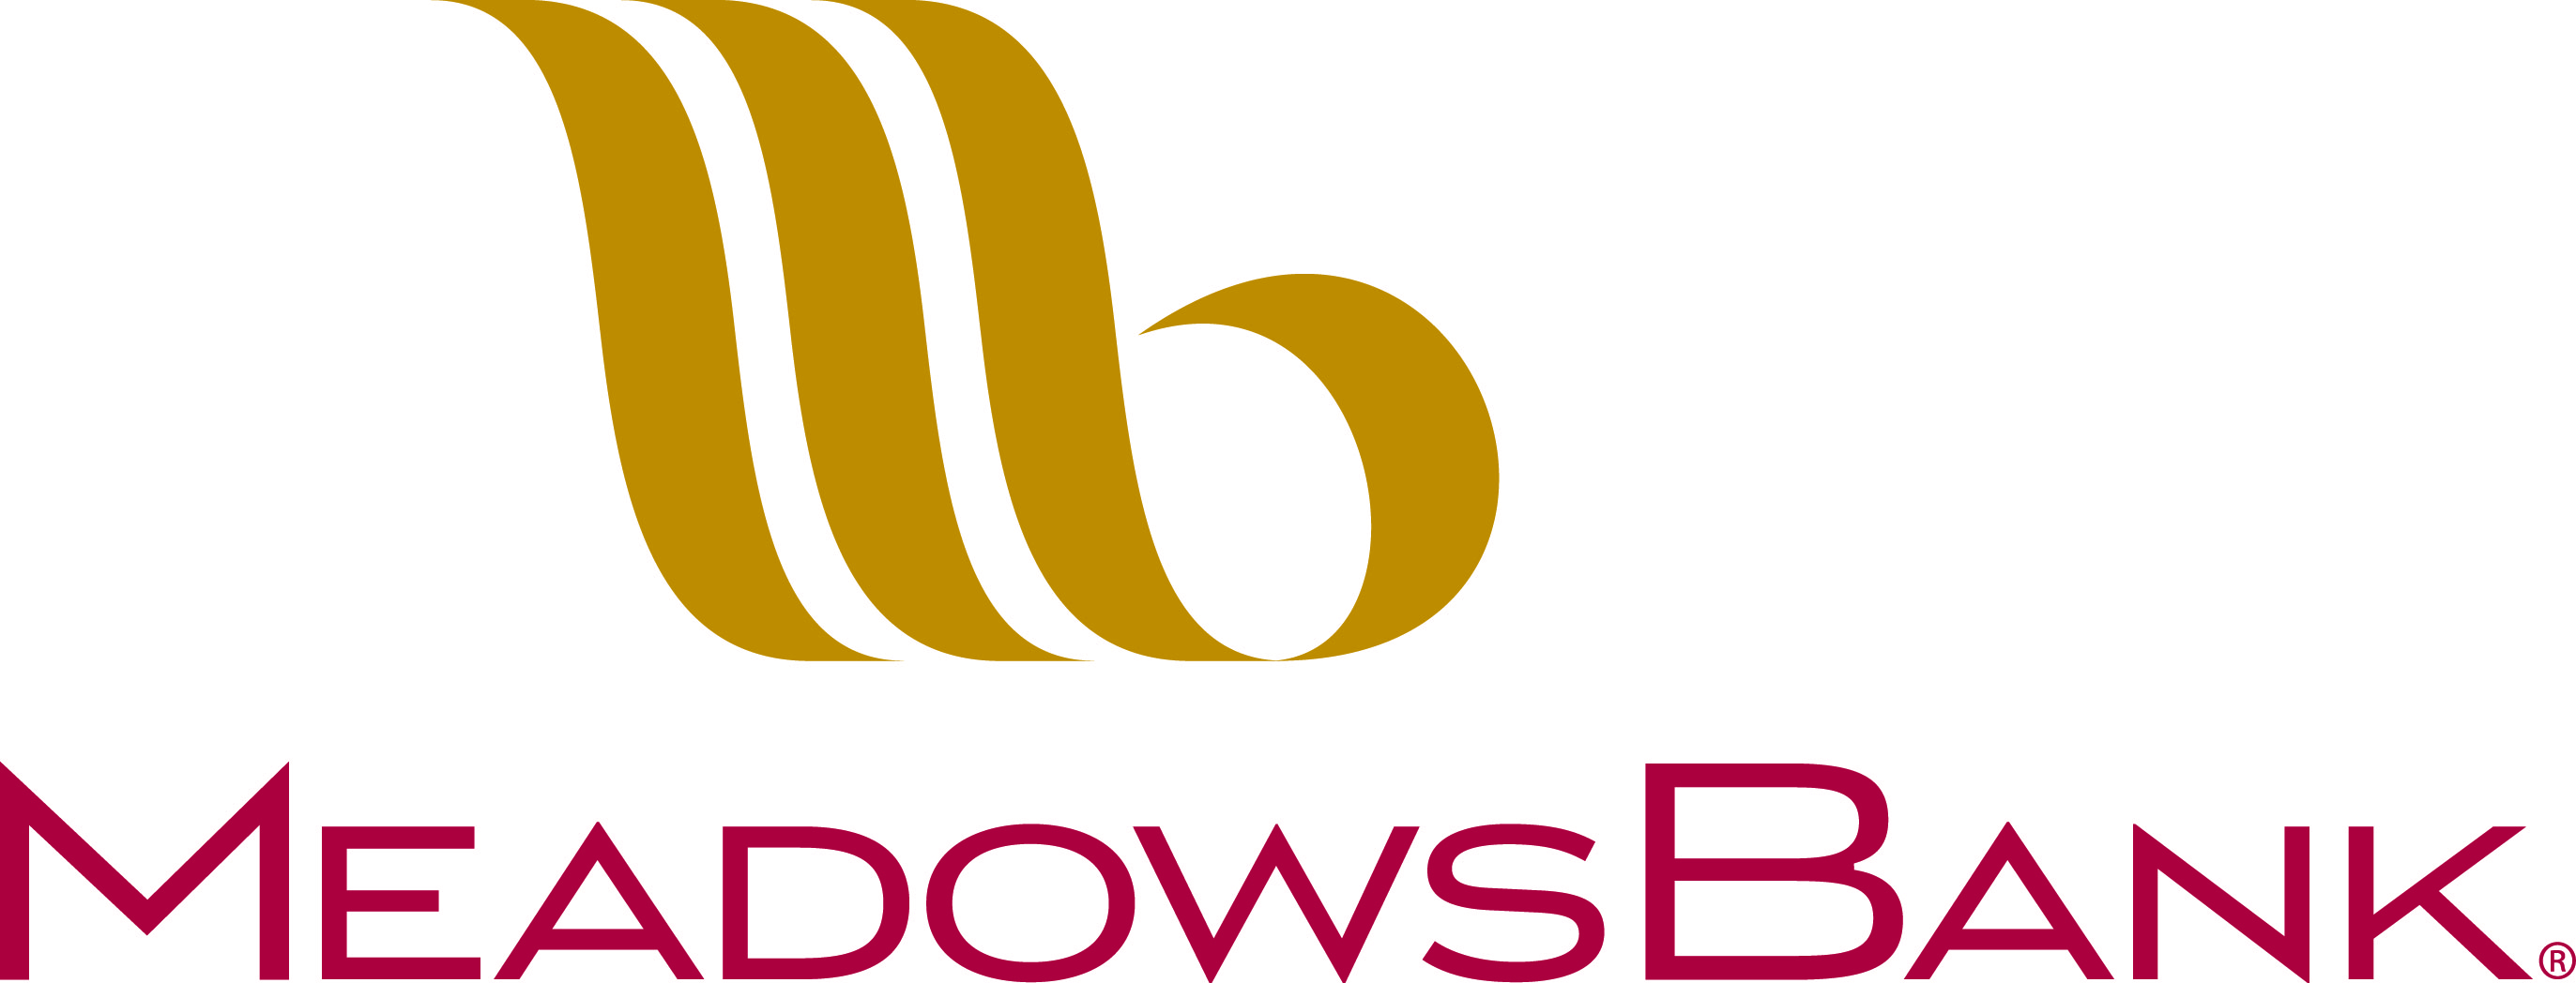 Meadows Bank Total Assets Reach $1 Billion